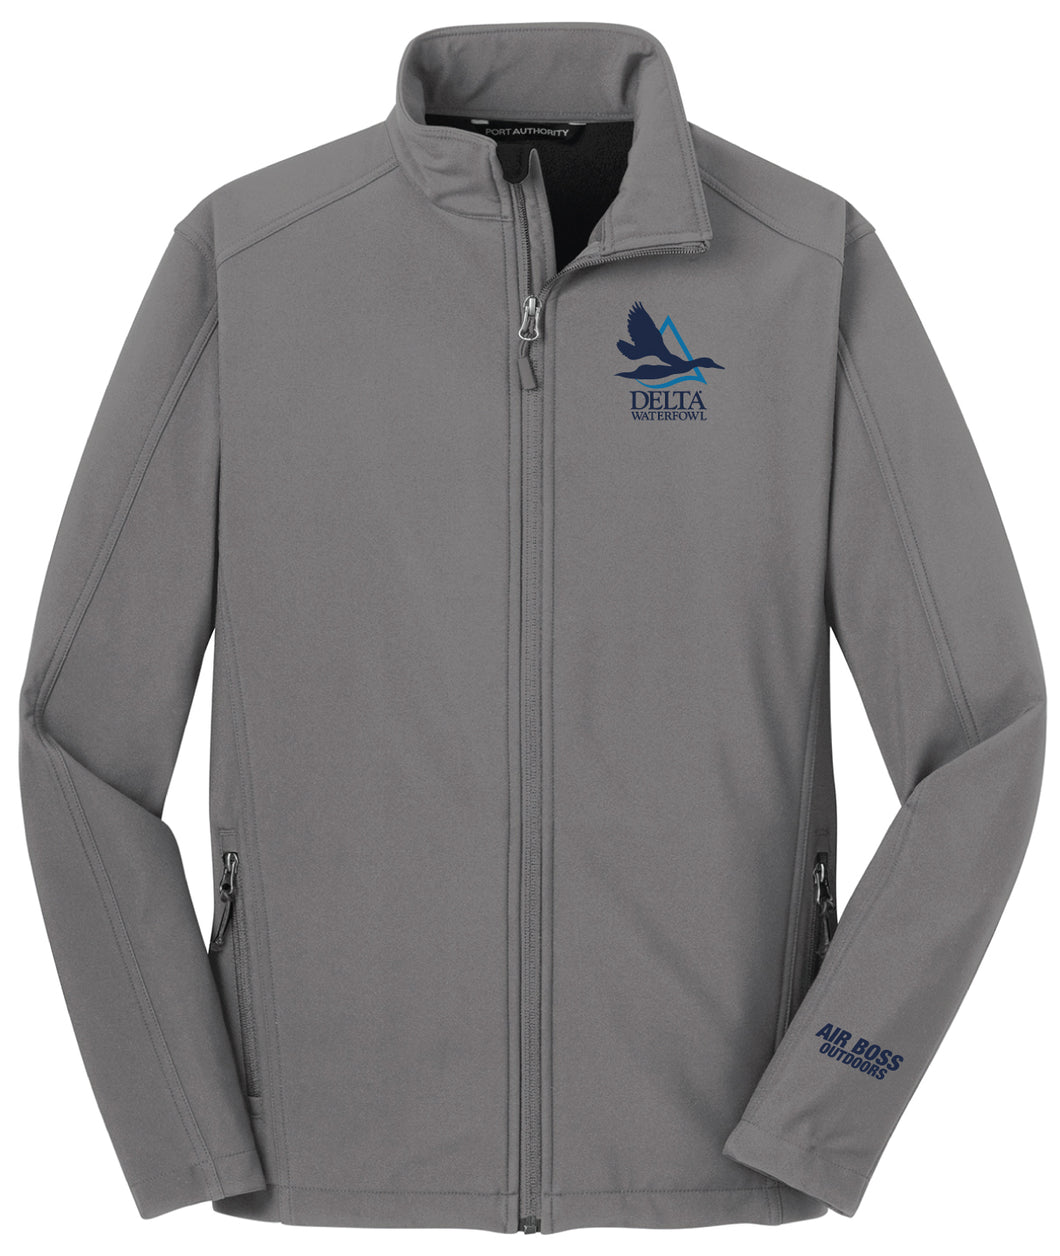 Grey Delta Waterfowl Jacket